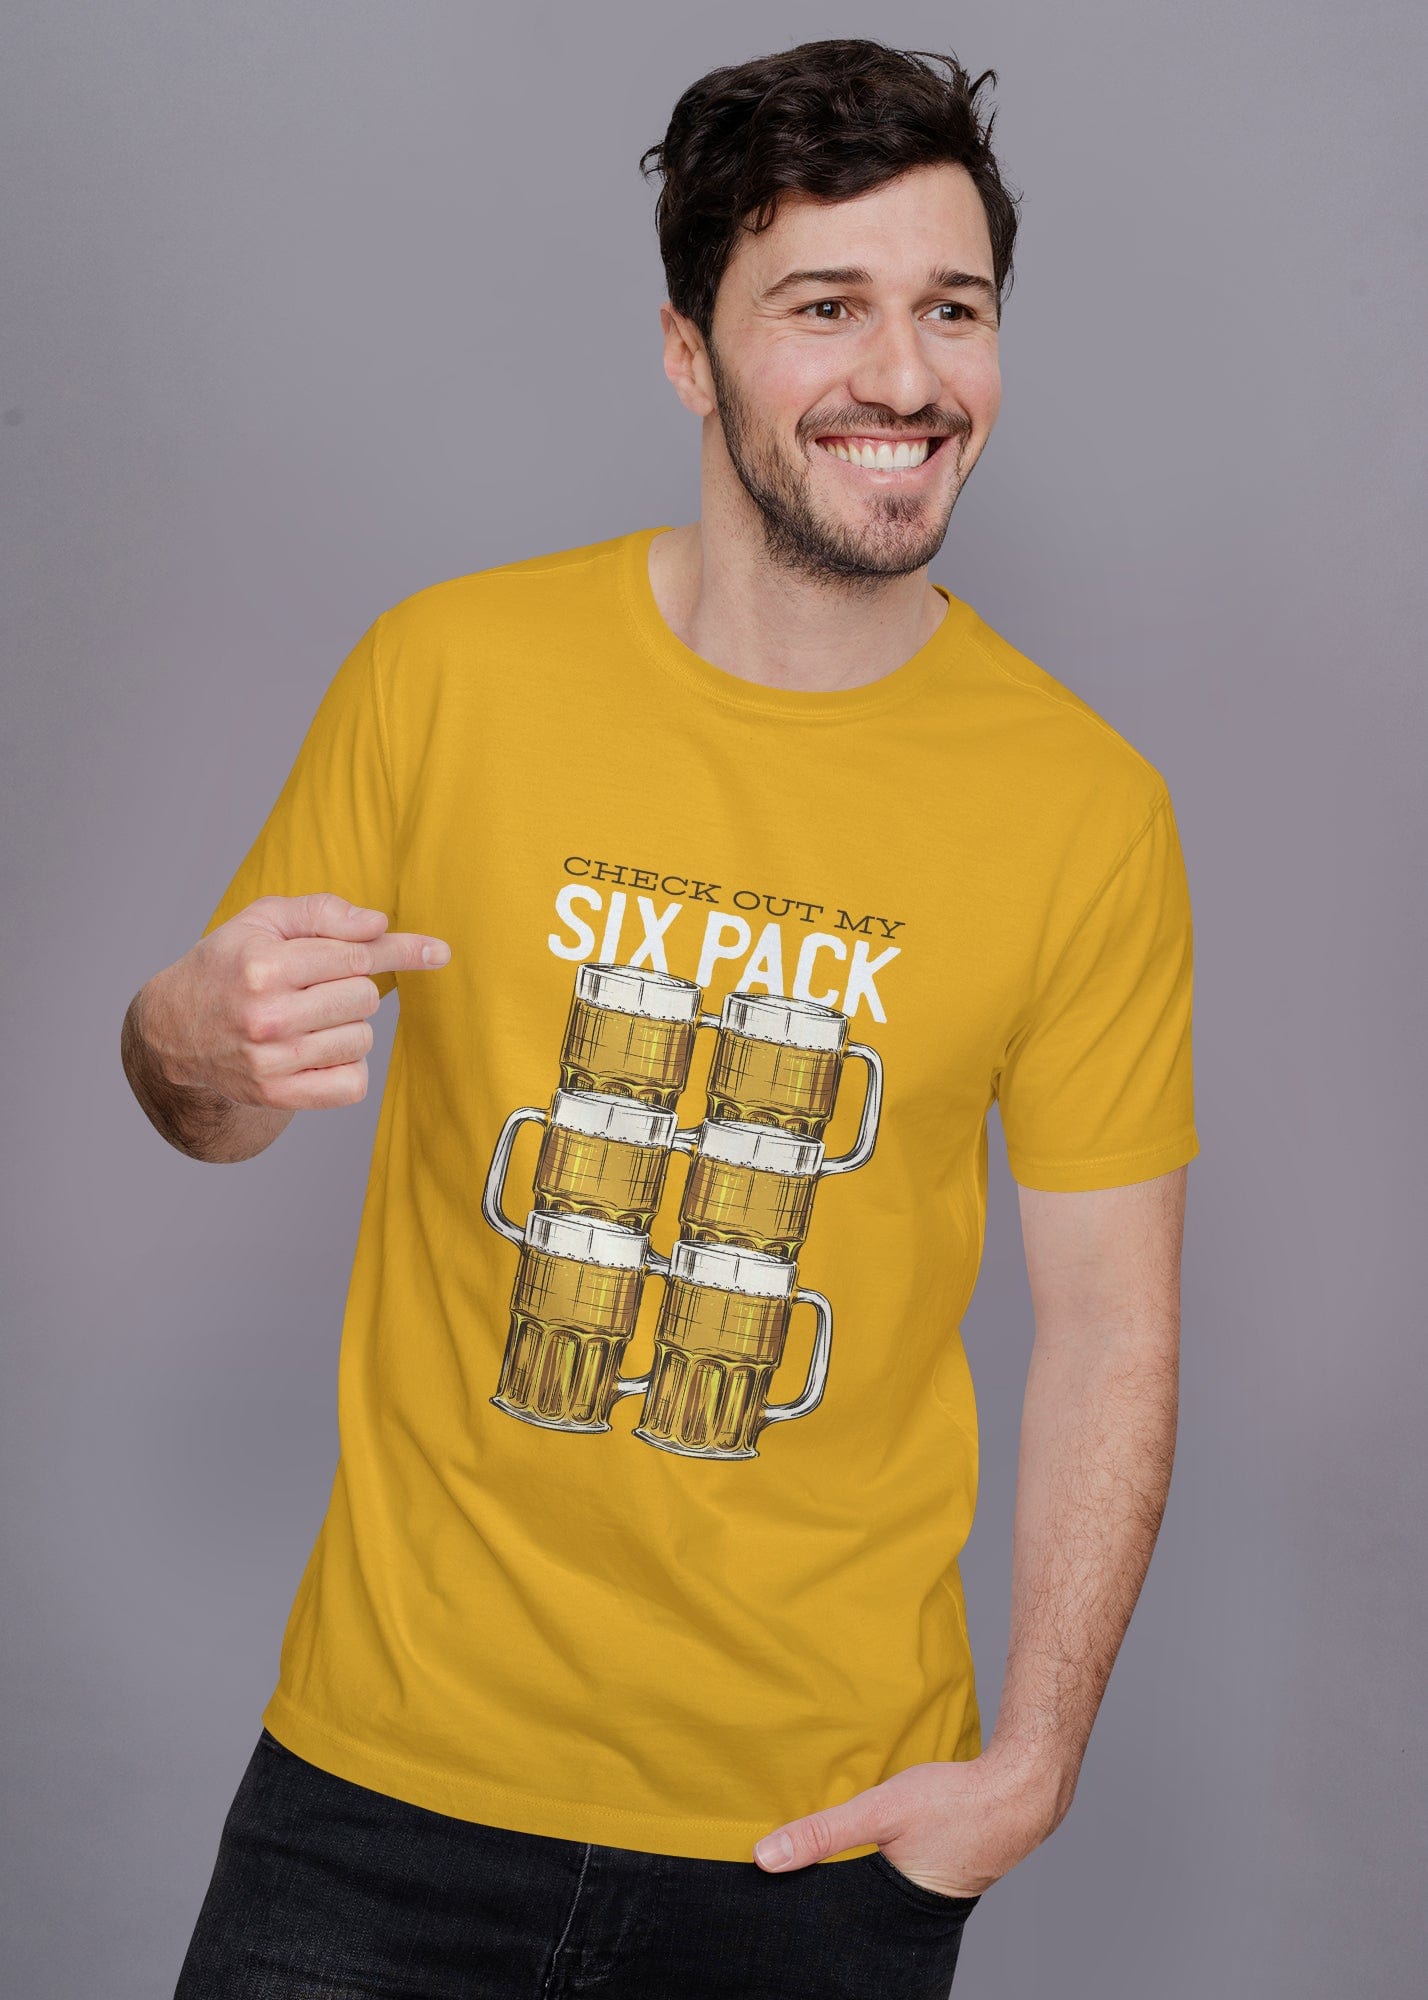 Six Pack Printed Half Sleeve Premium Cotton T-shirt For Men